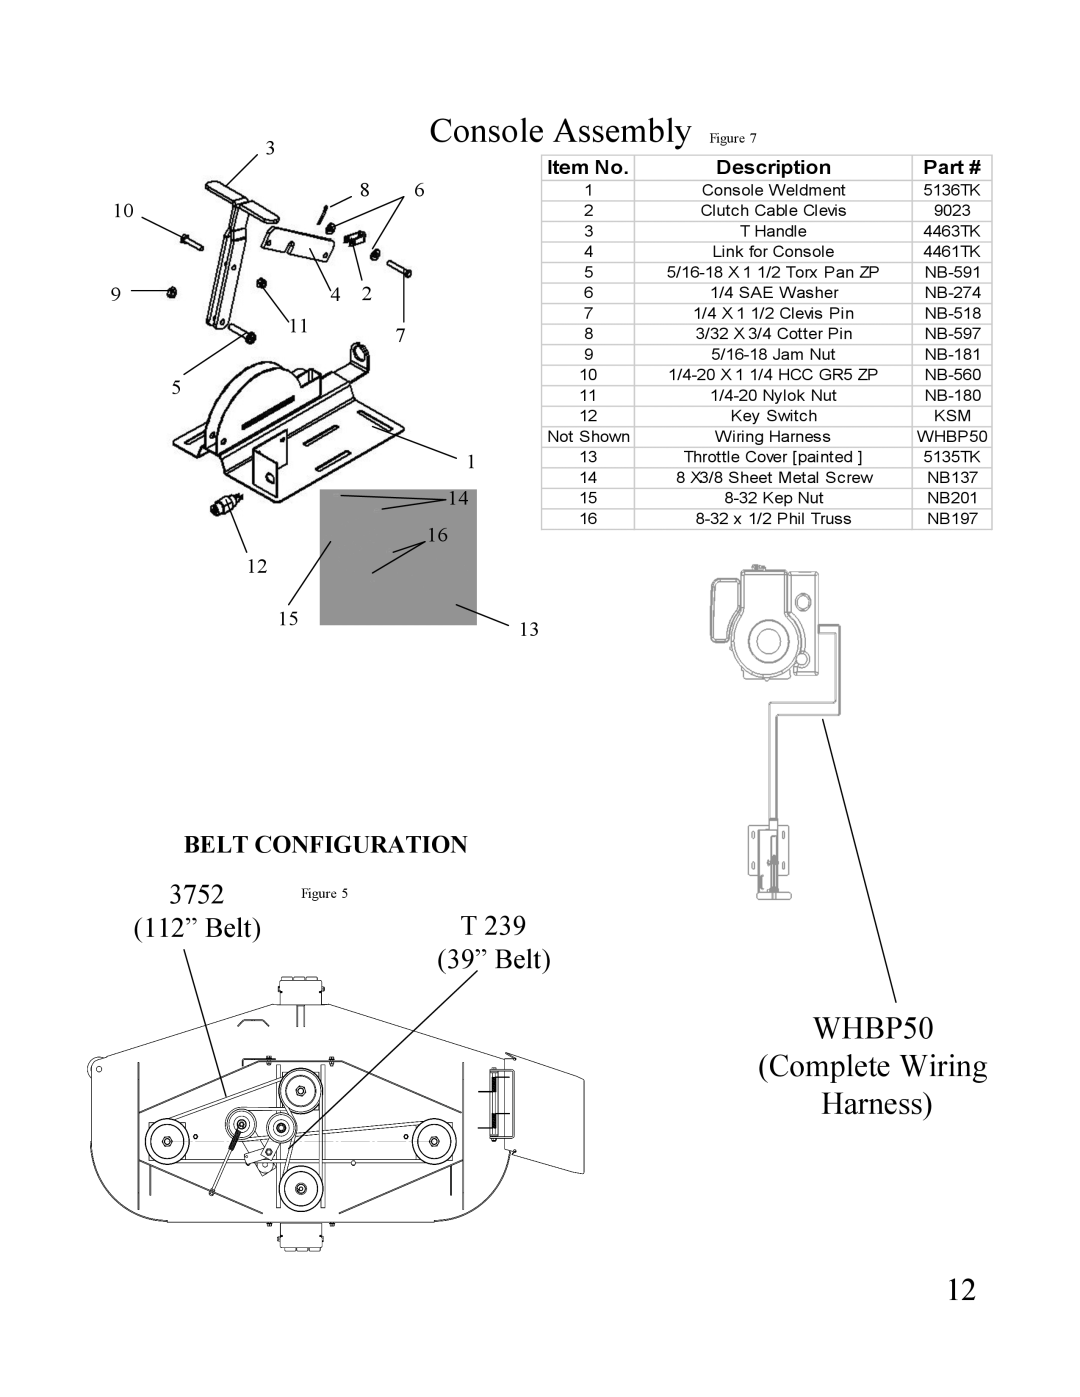 Swisher ONFT1150 Console Assembly Figure, WHBP50 Complete Wiring Harness, 3752, 112” Belt, 39” Belt, Belt Configuration 